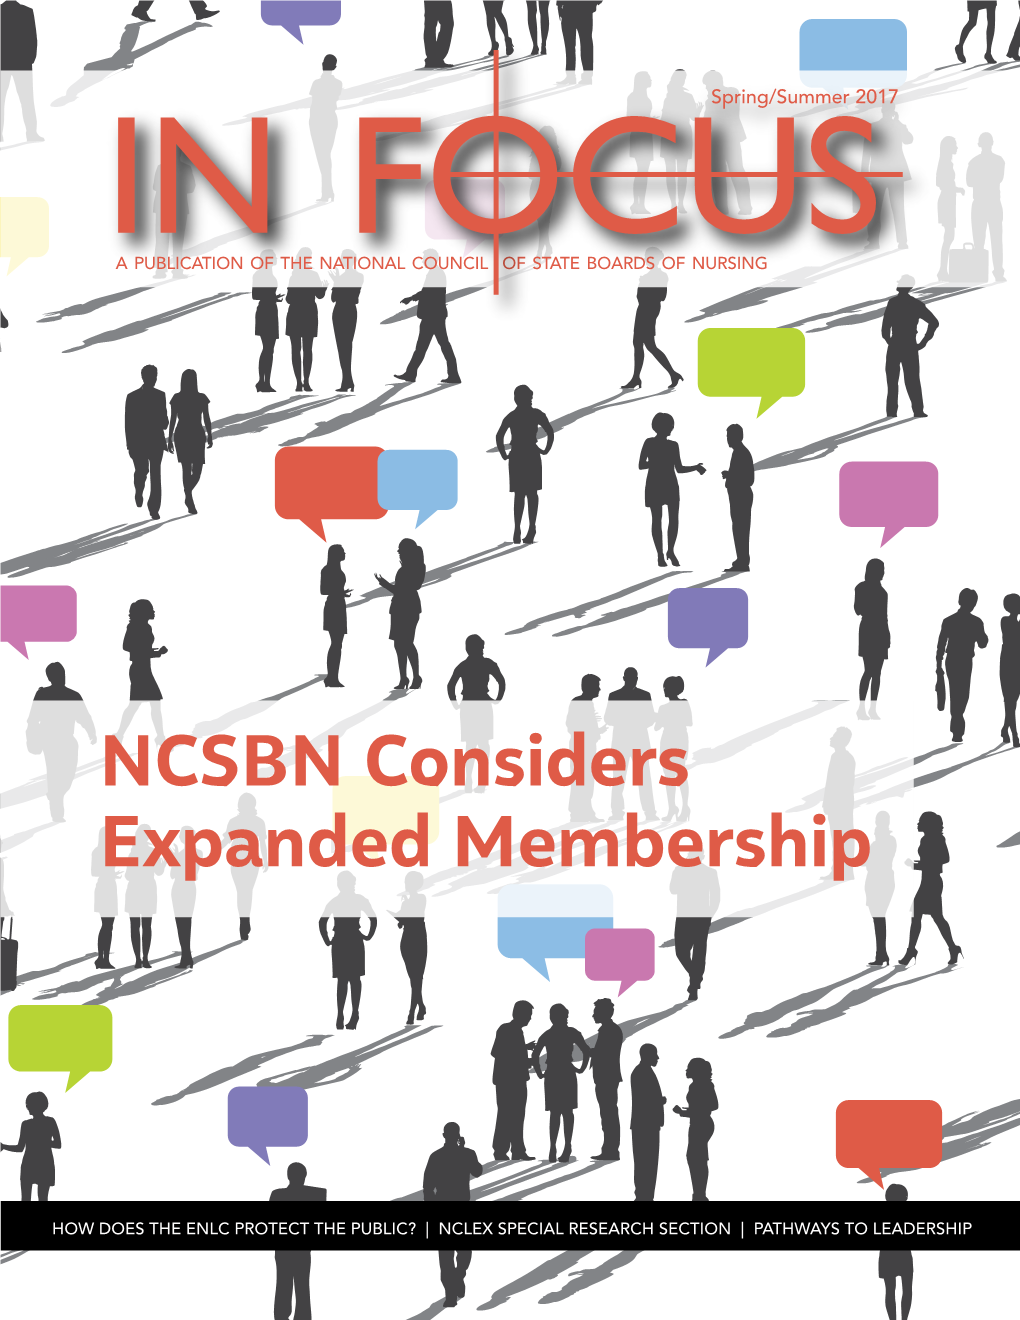 NCSBN Considers Expanded Membership